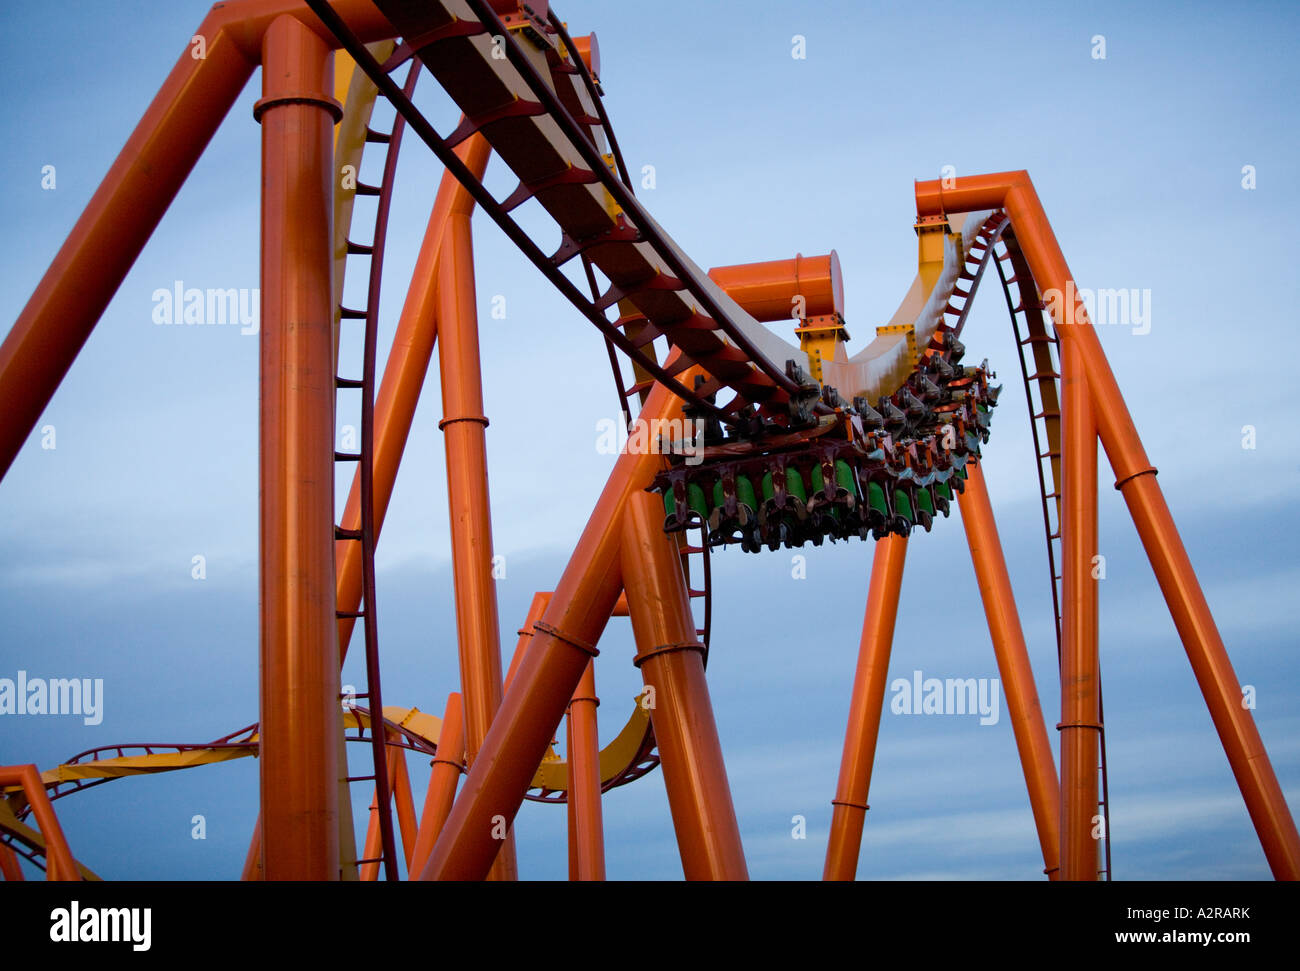 Tatsu rollercoaster Six Flags Magic Mountain Rides Valencia California United States of America Stock Photo